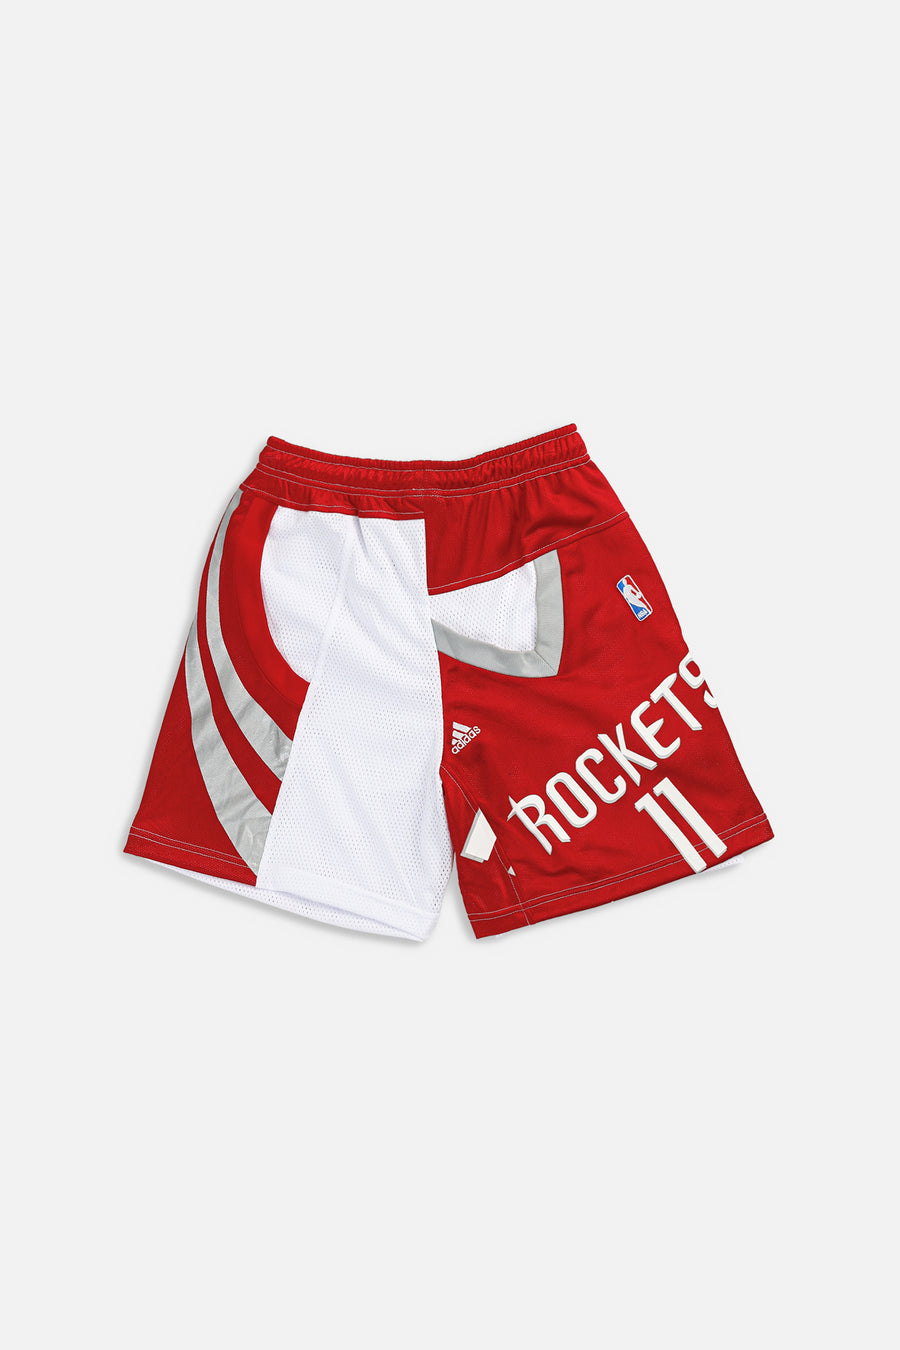 Unisex Rework Houston Rockets NBA Jersey Shorts - S